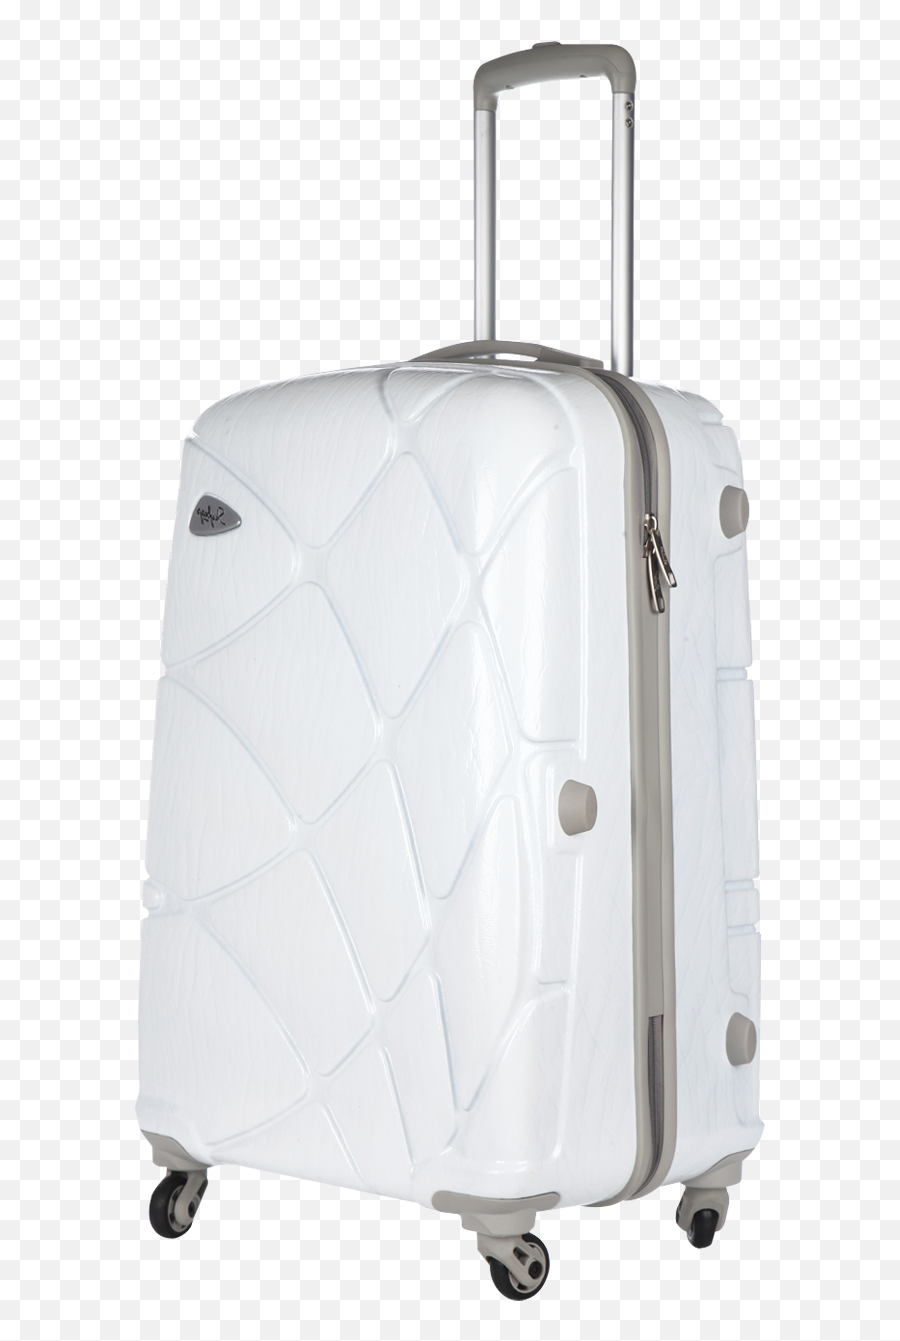 Strolley Bag Png Transparent Image - Pngpix Solid,Suitcase Png